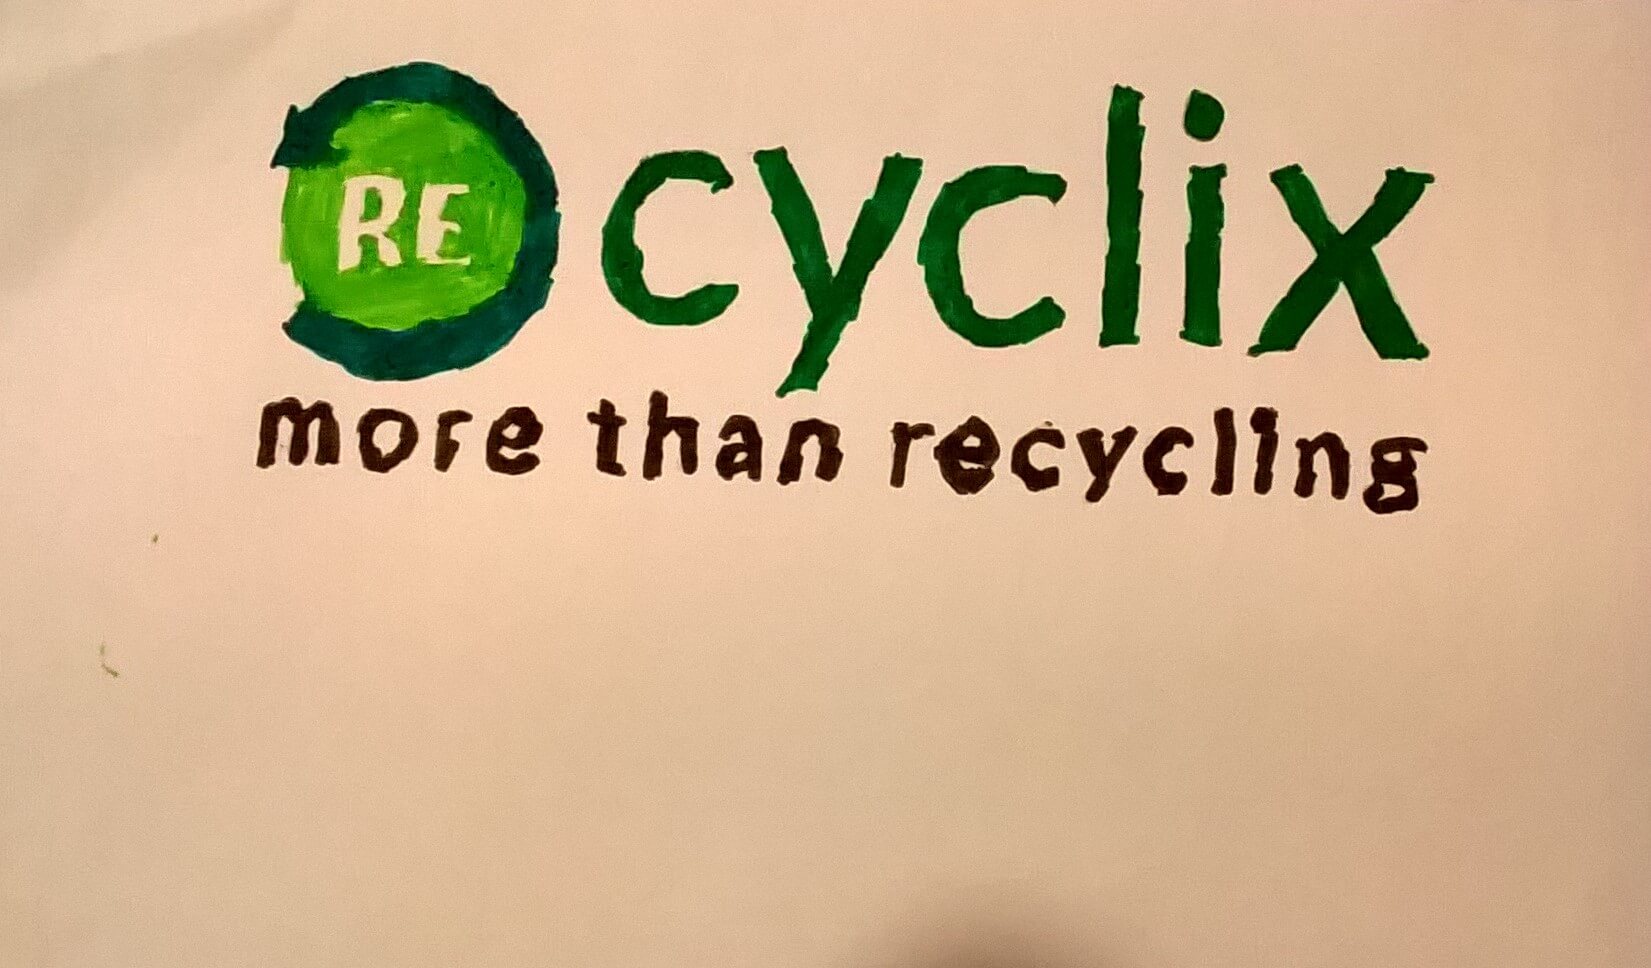 Recyclix